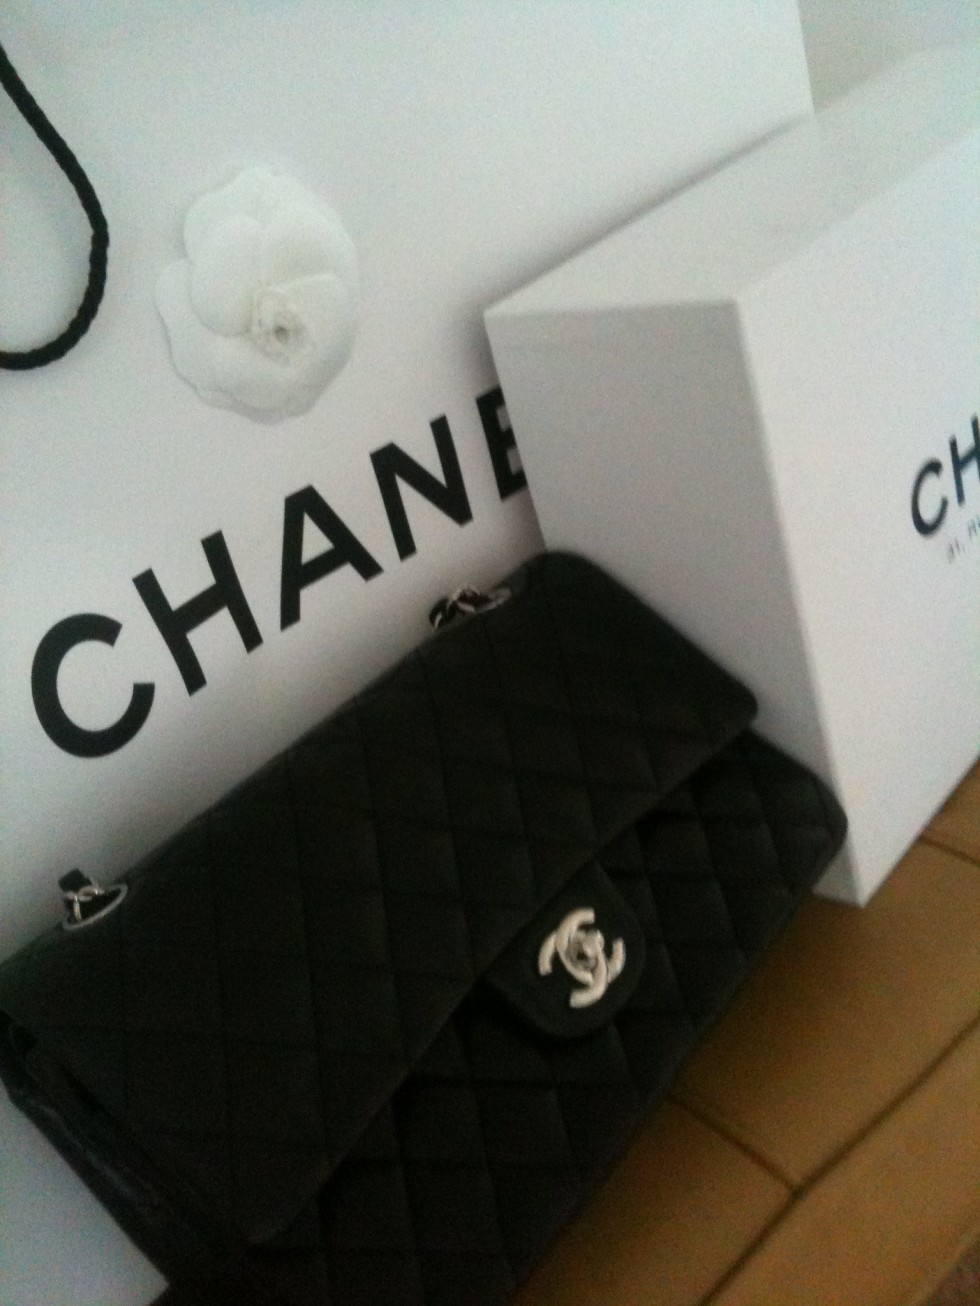 Chanel 2 55 | Ingen kategori | frk vilstrup